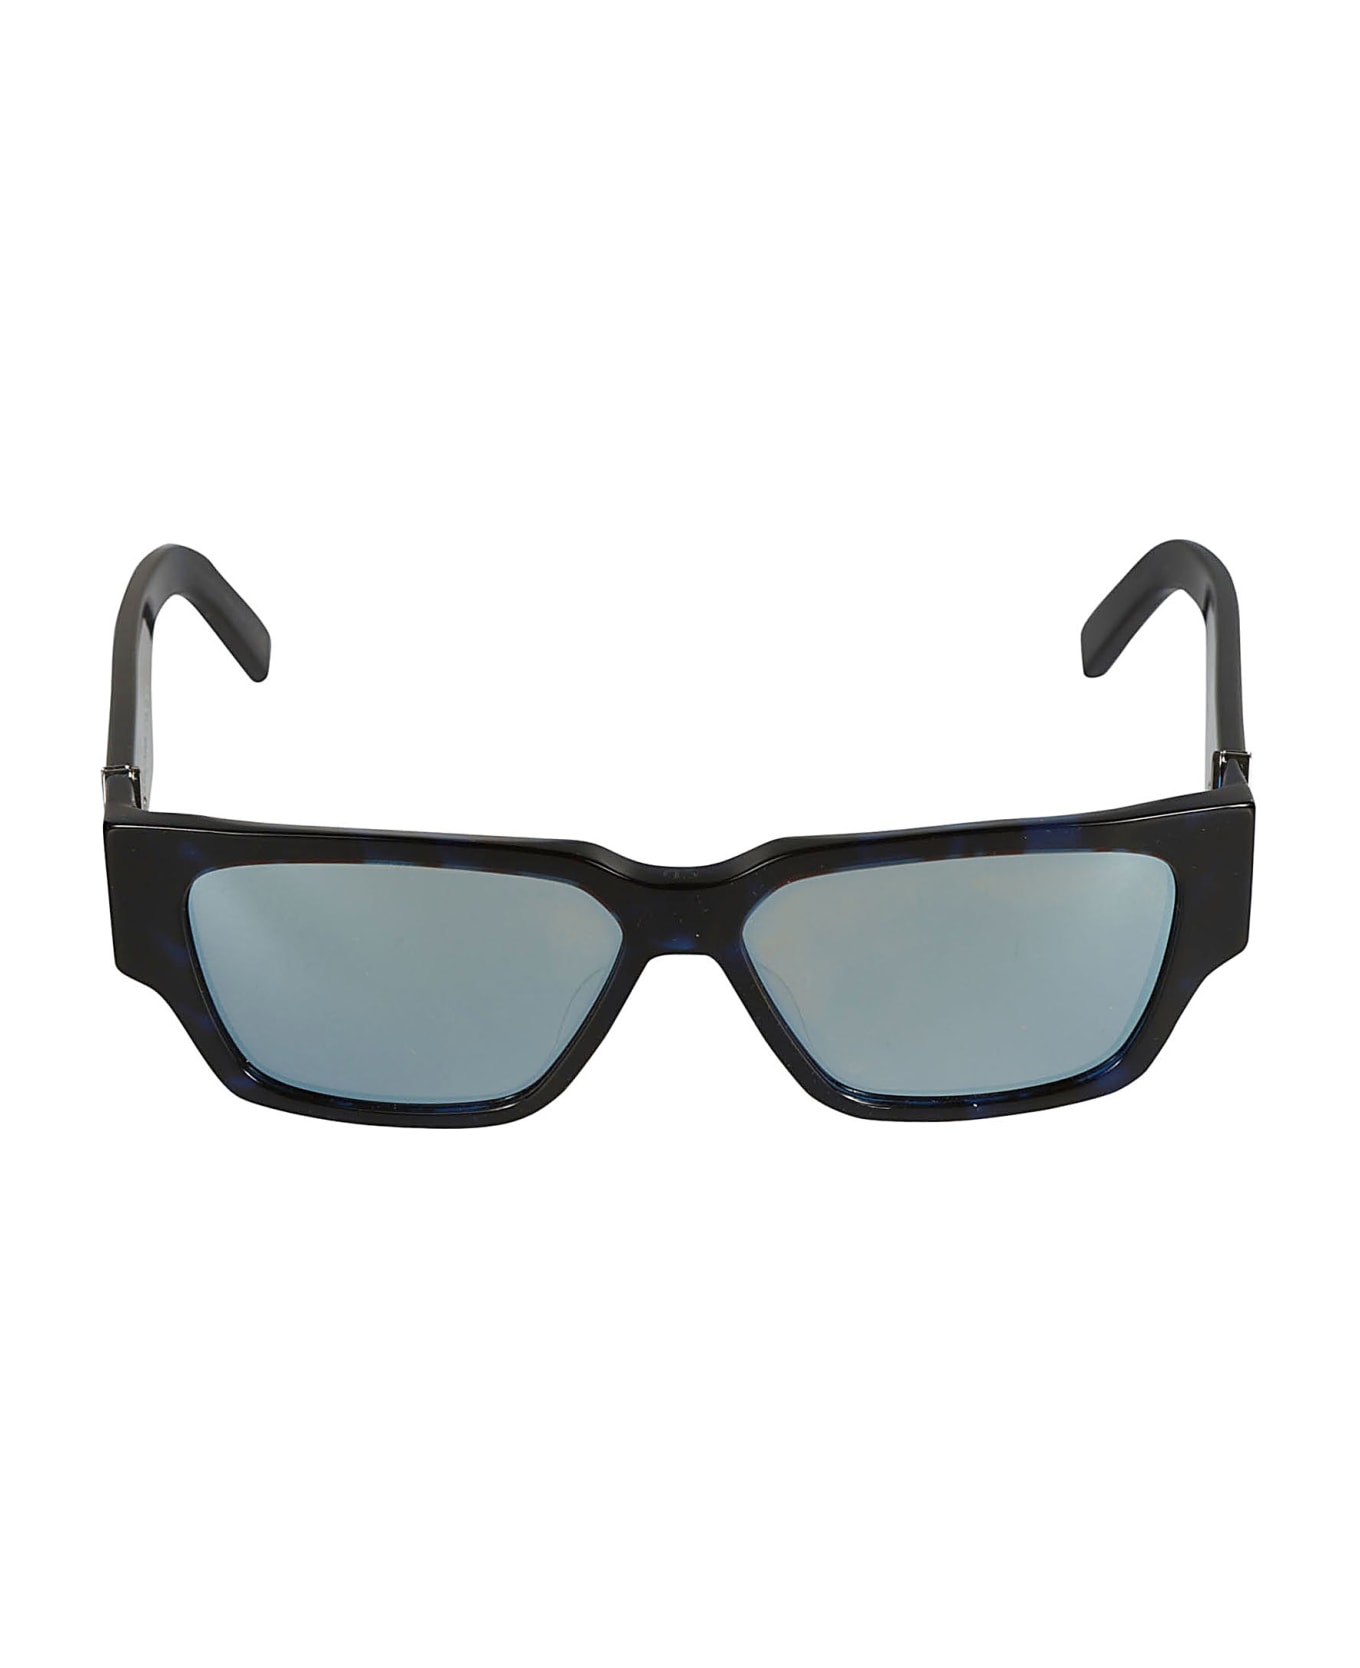 Dior Eyewear Diamond Sunglasses - 28i7 サングラス